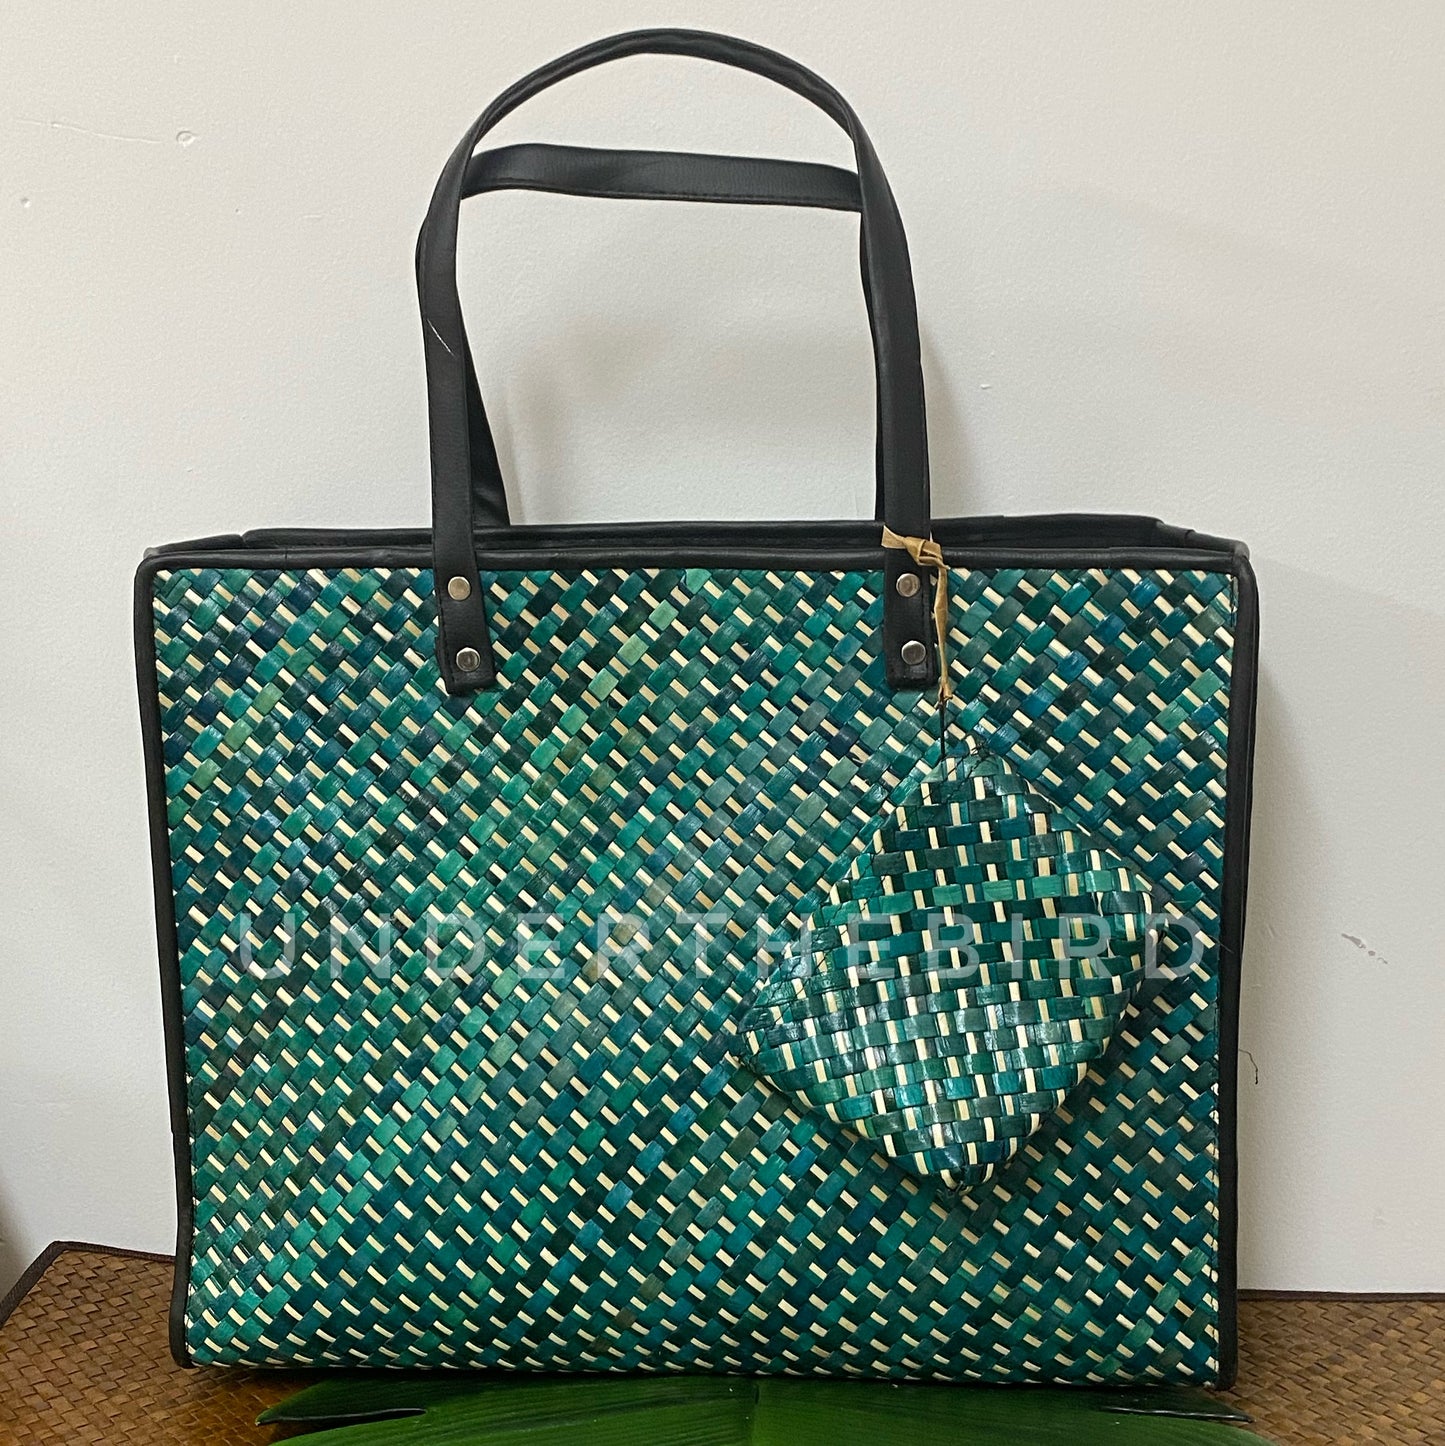 Rita Large Woven Handbag 2 pc set